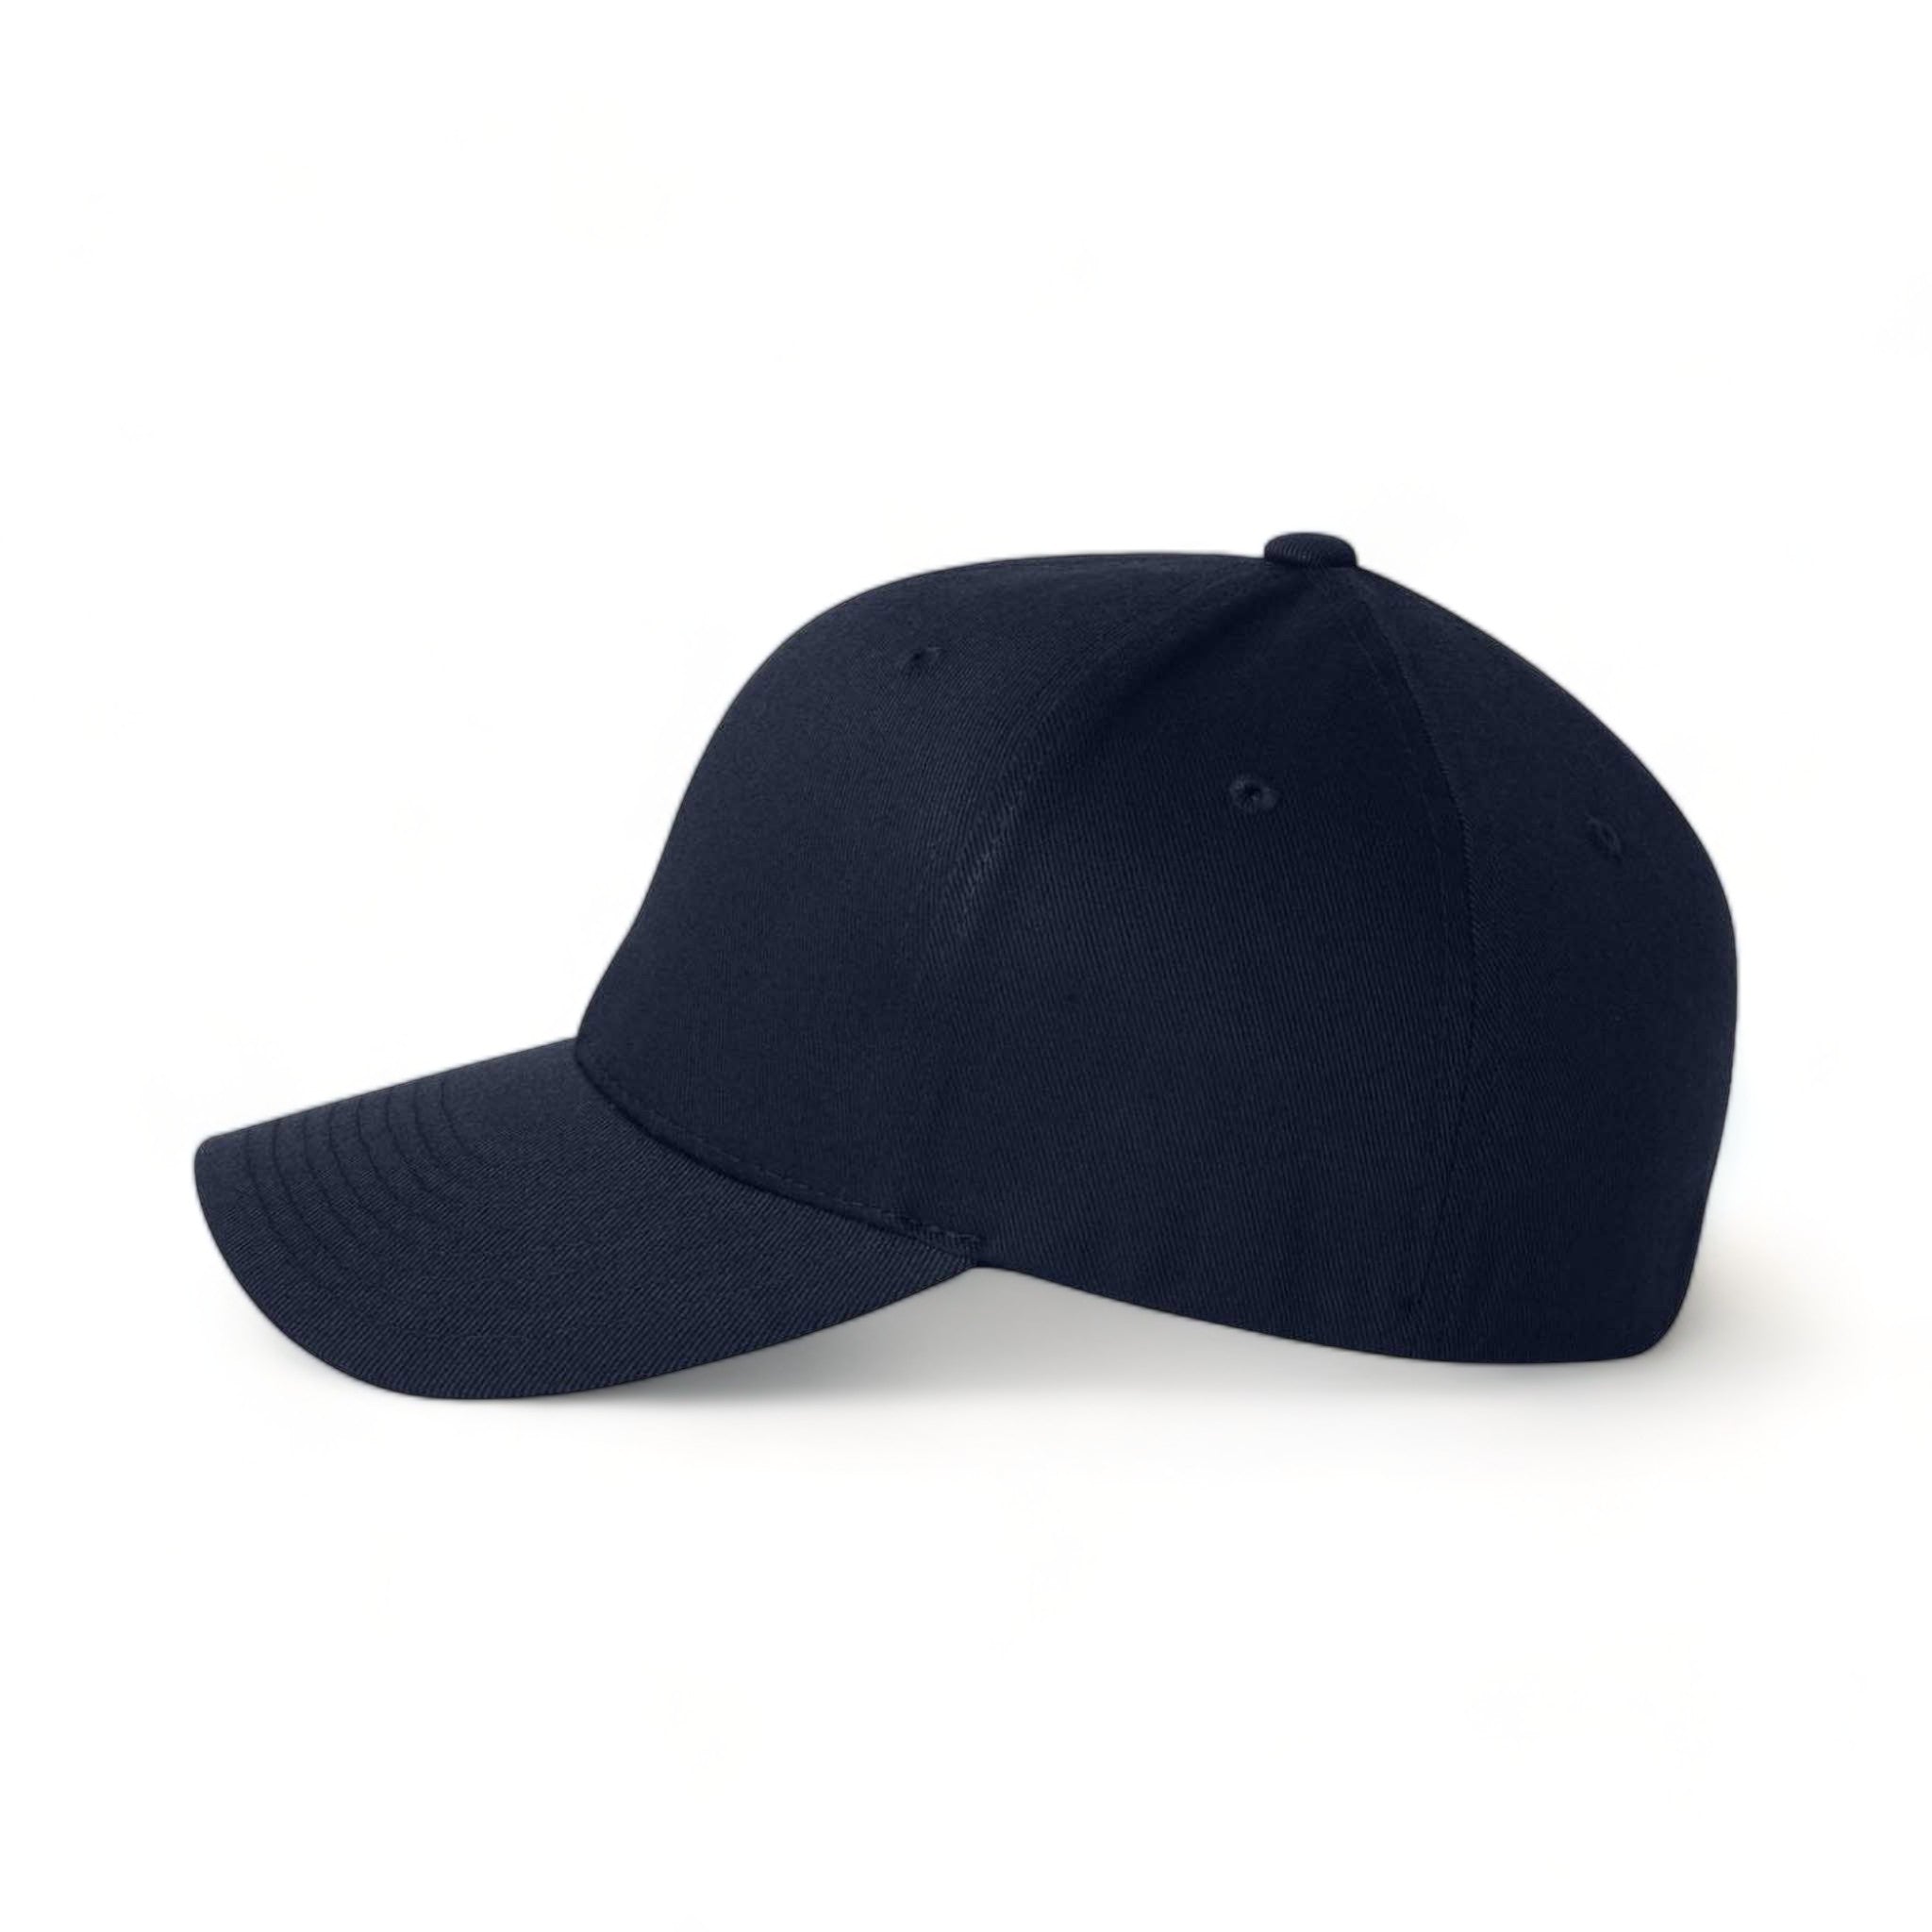 Side view of Flexfit 6277 custom hat in dark navy